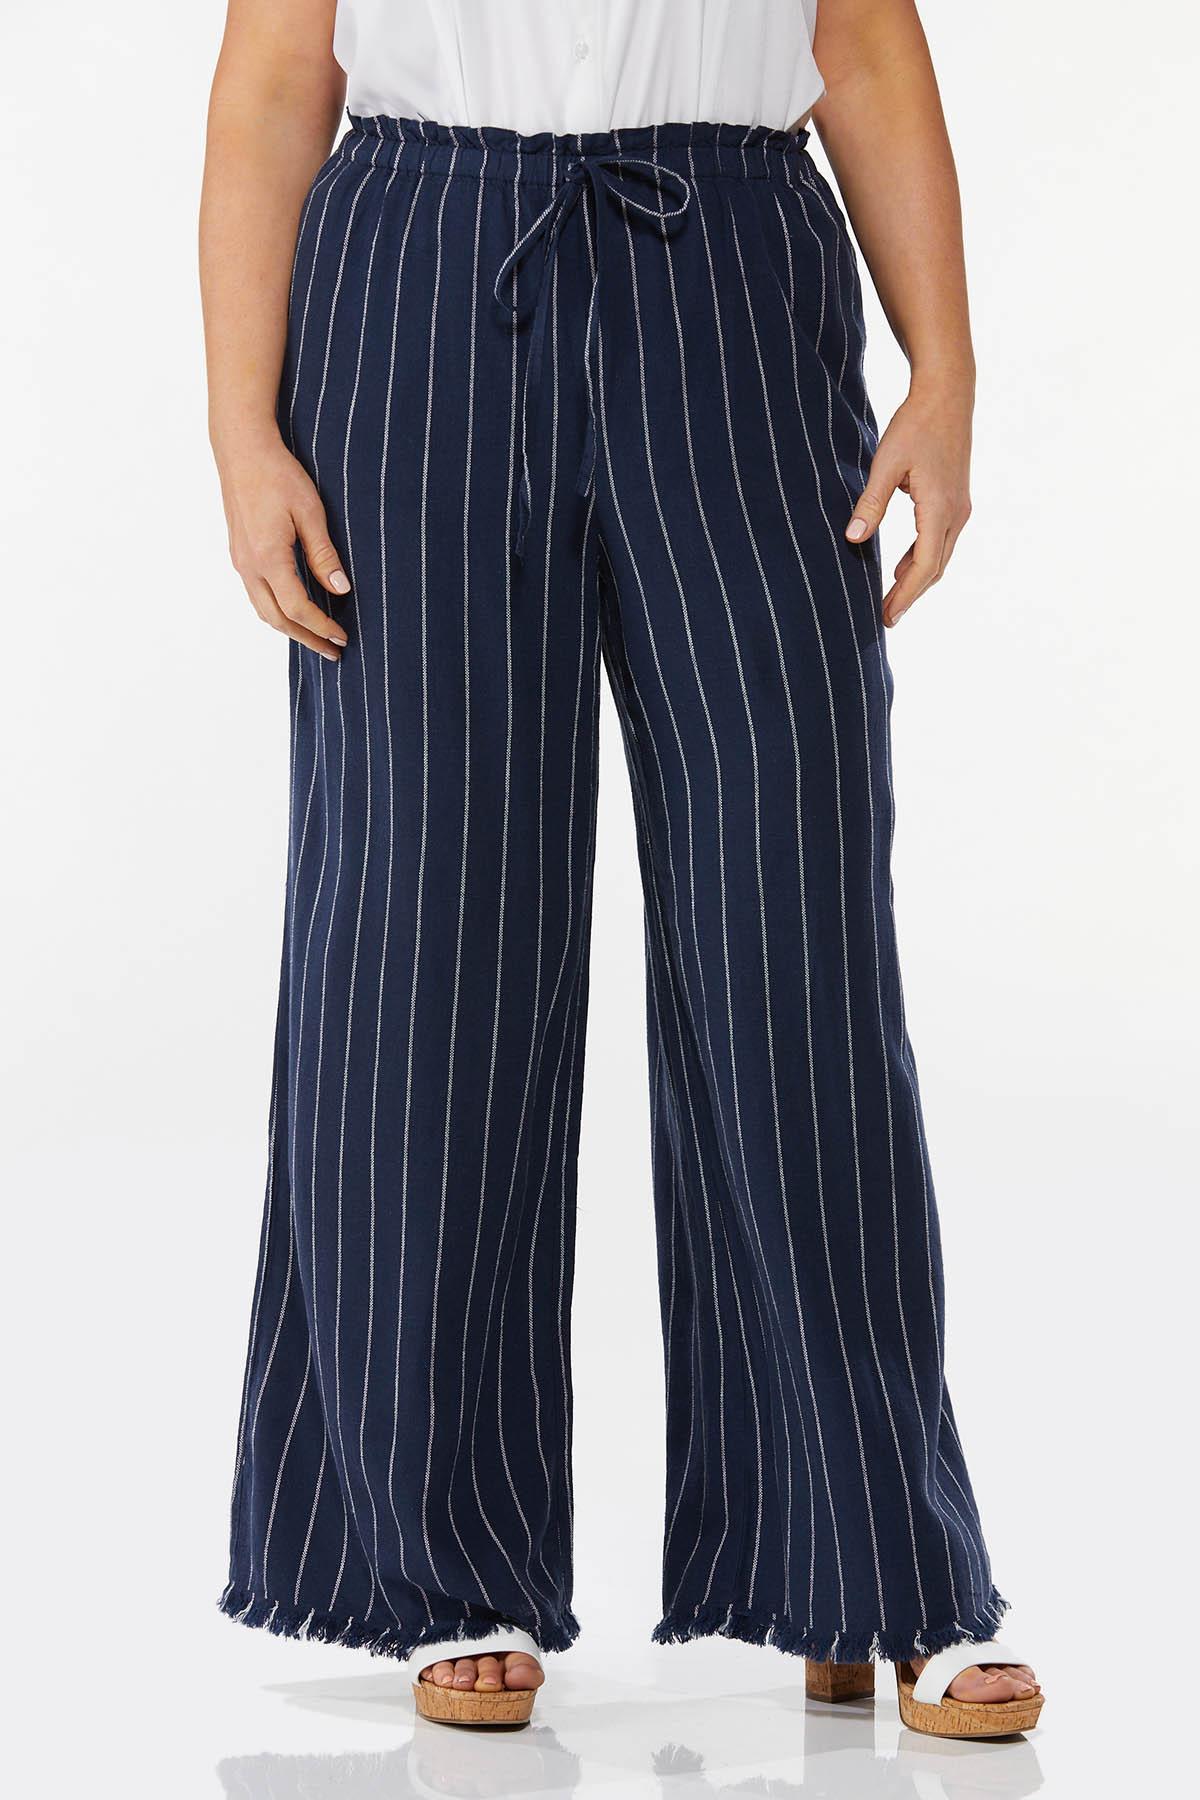 Plus Size Frayed Nautical Stripe Pants